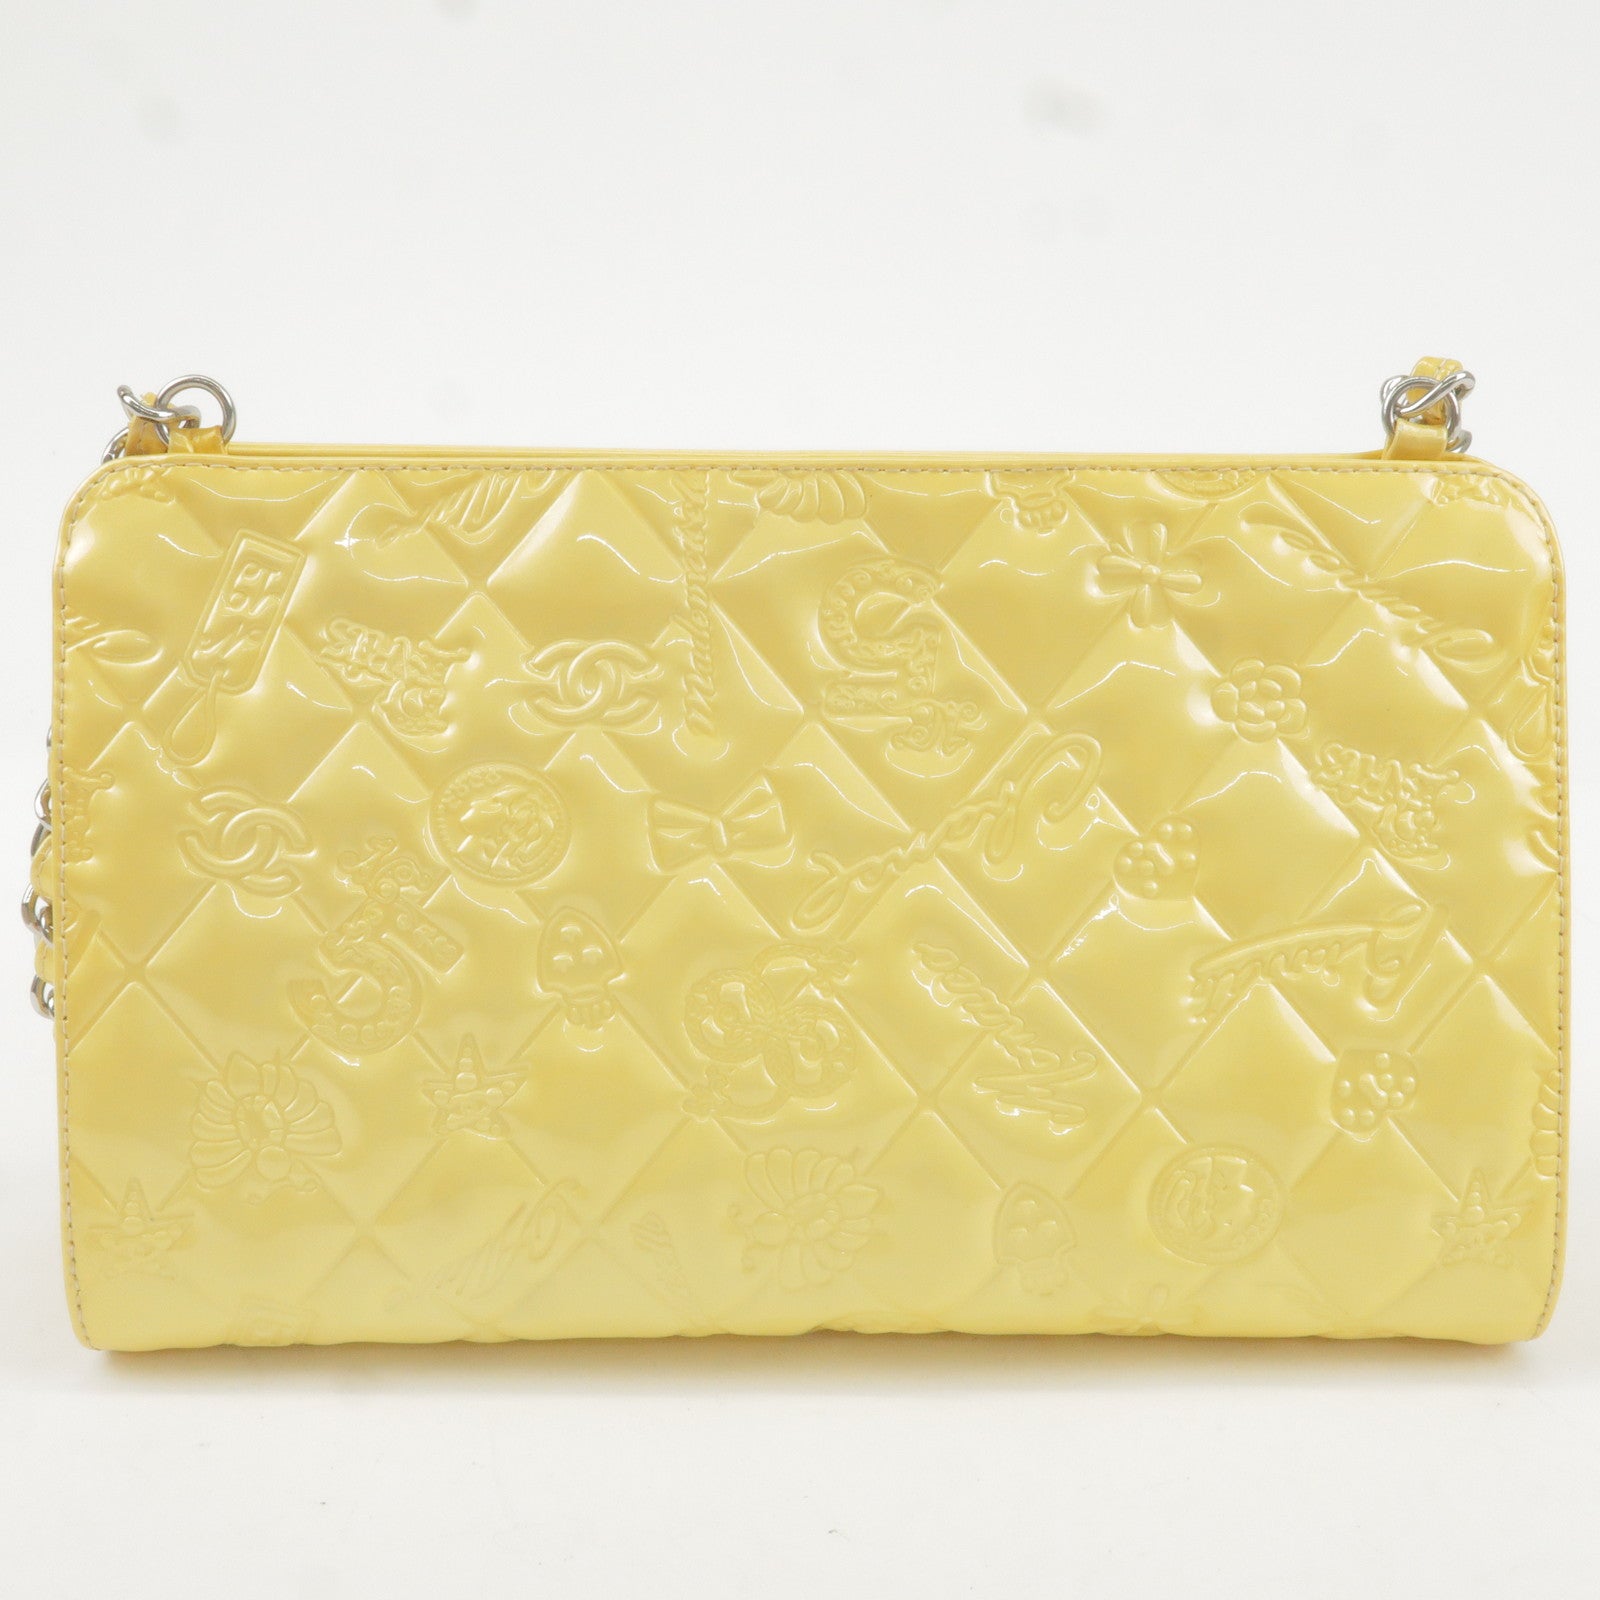 CHANEL, Bags, Chanel Cc Logo Chain Shoulder Bag Leather Bordeaux Gold  Italy Vintage